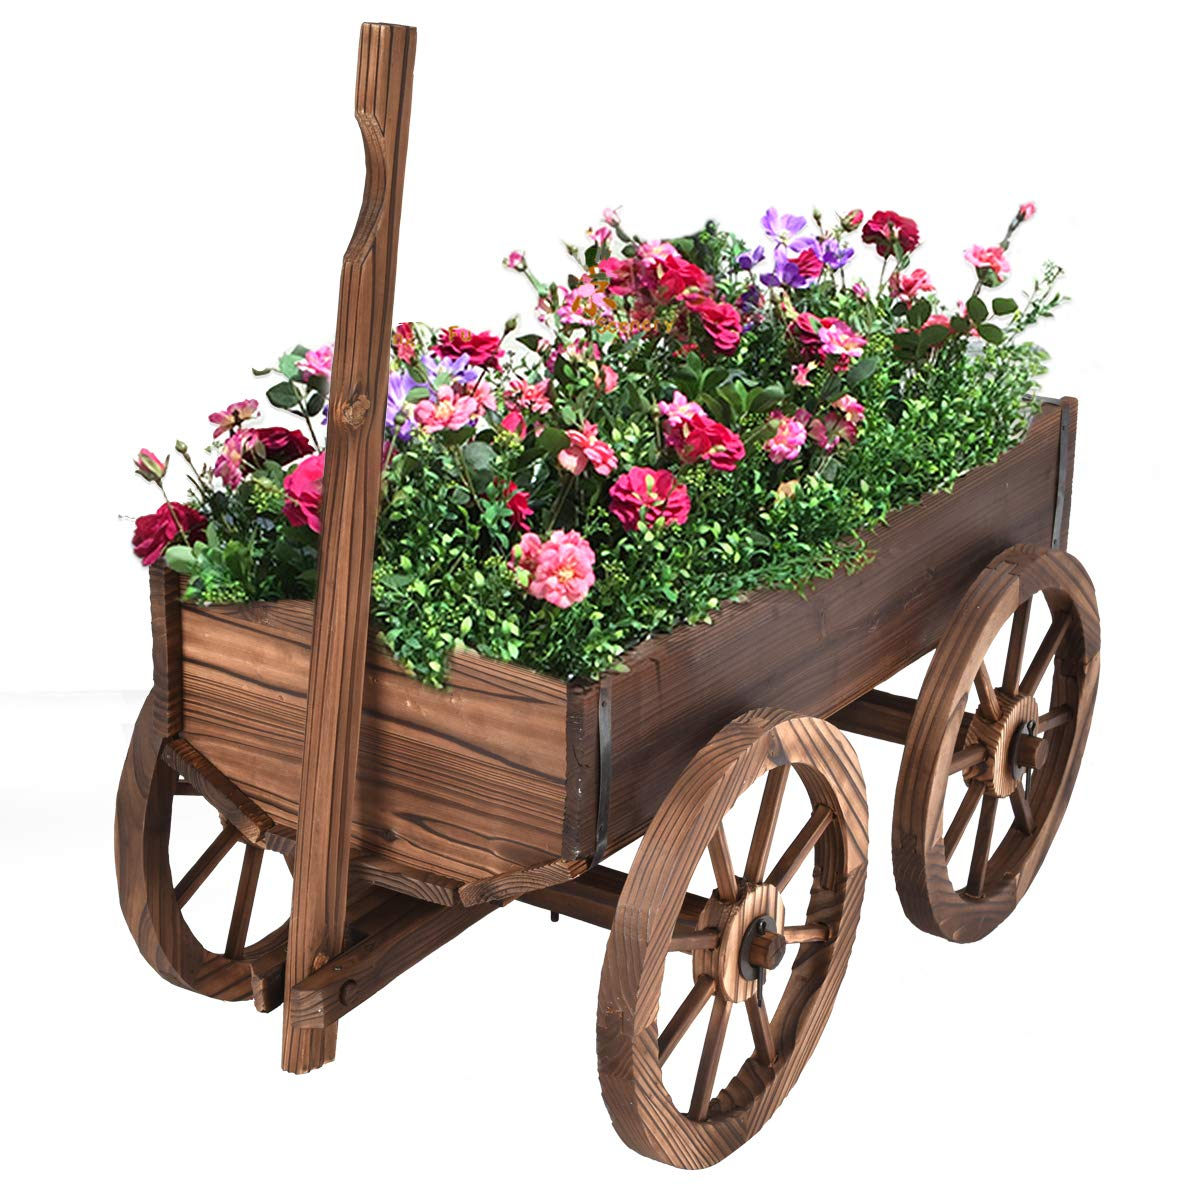 Giantex Wood Wagon Flower Planter Pot Stand W/Wheels Home Garden Outdoor Decor